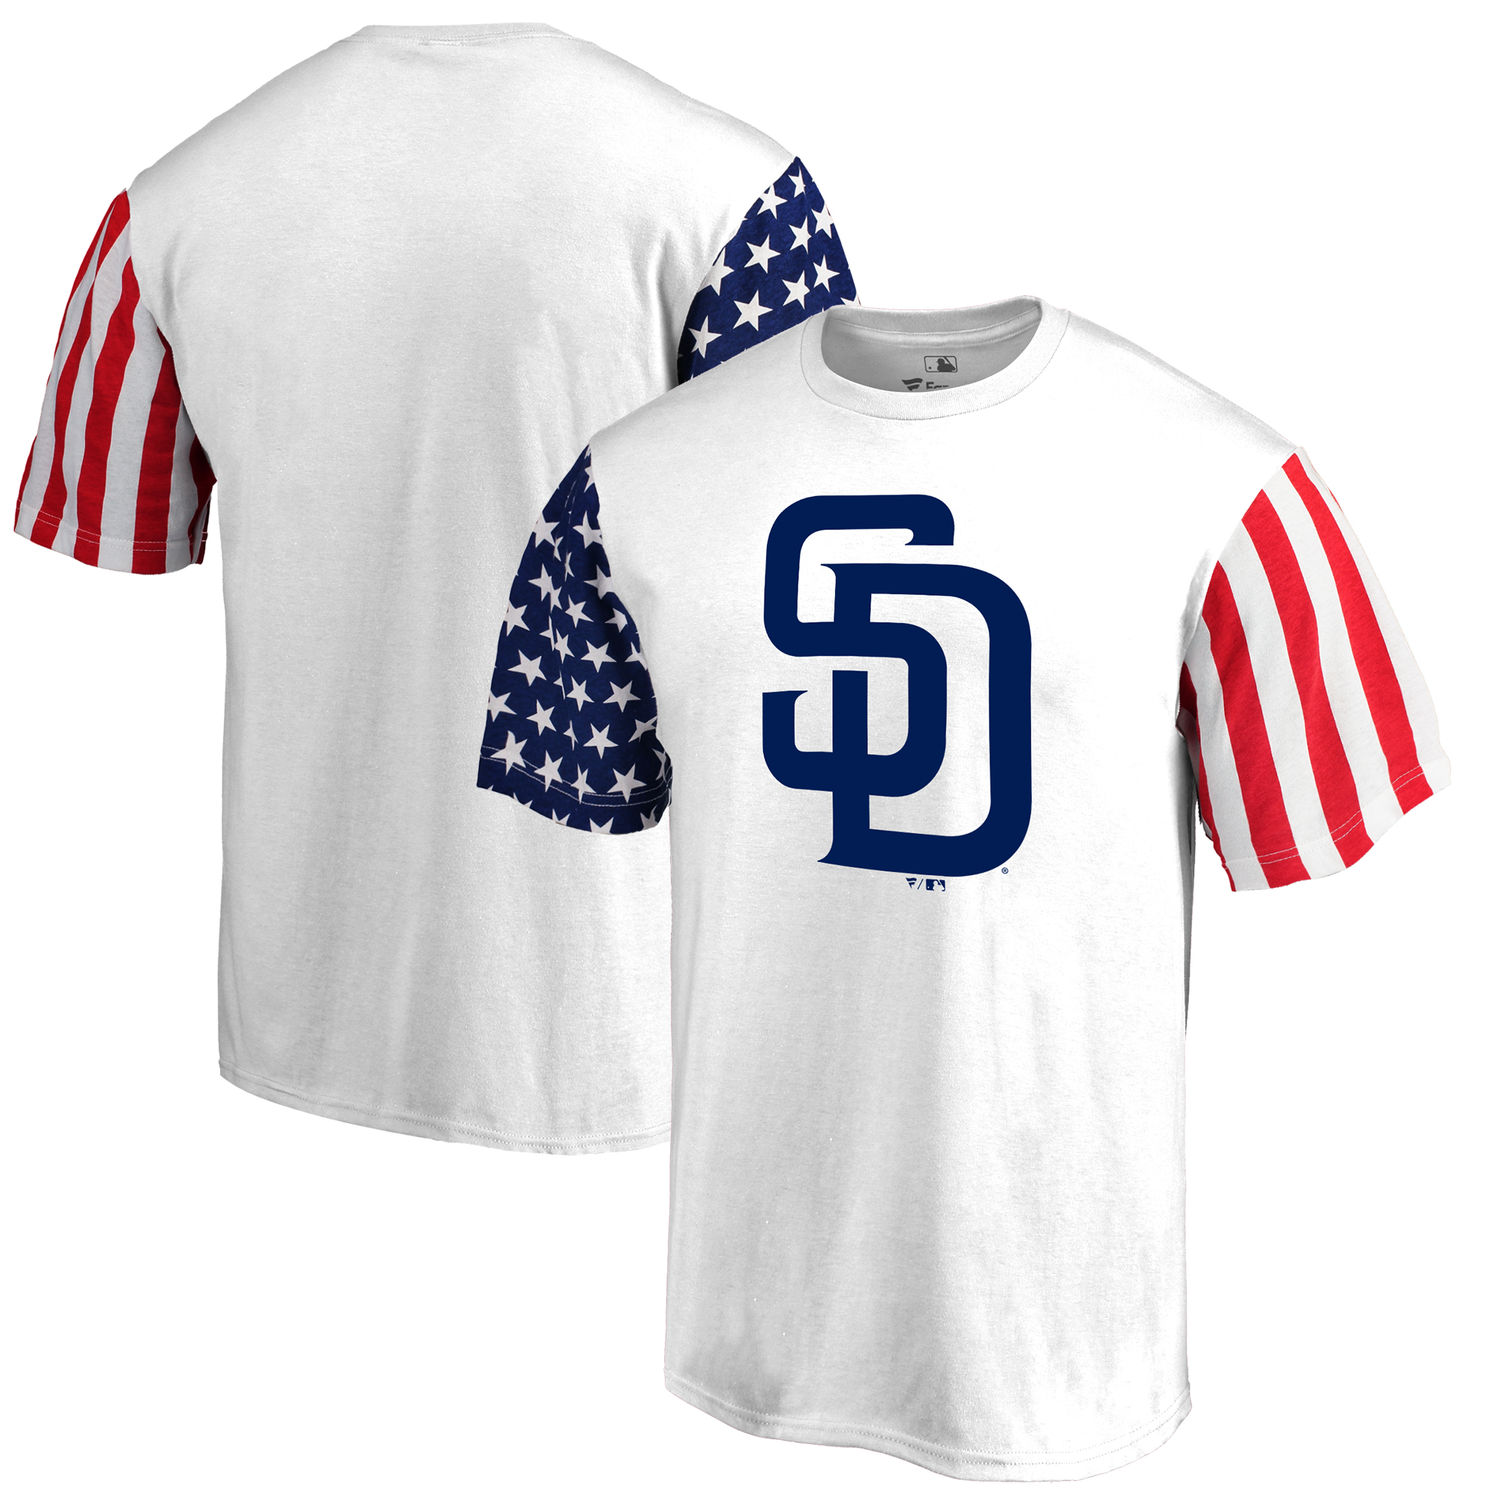 Mens San Diego Padres Fanatics Branded White Stars & Stripes T-Shirt